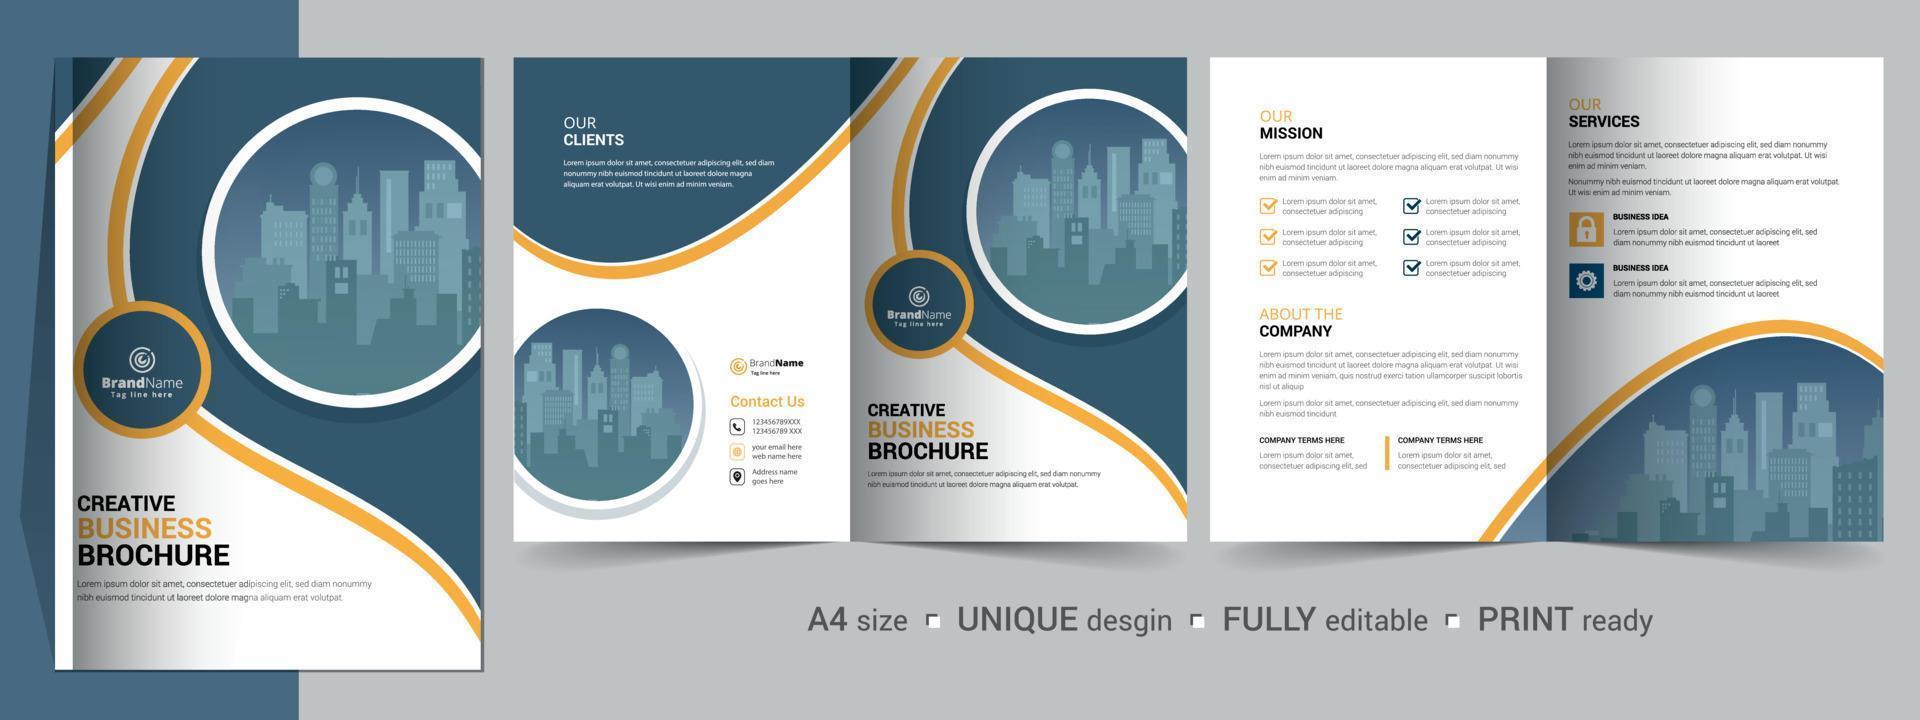 kreativa corporate modern business bifold broschyr malldesign. vektor